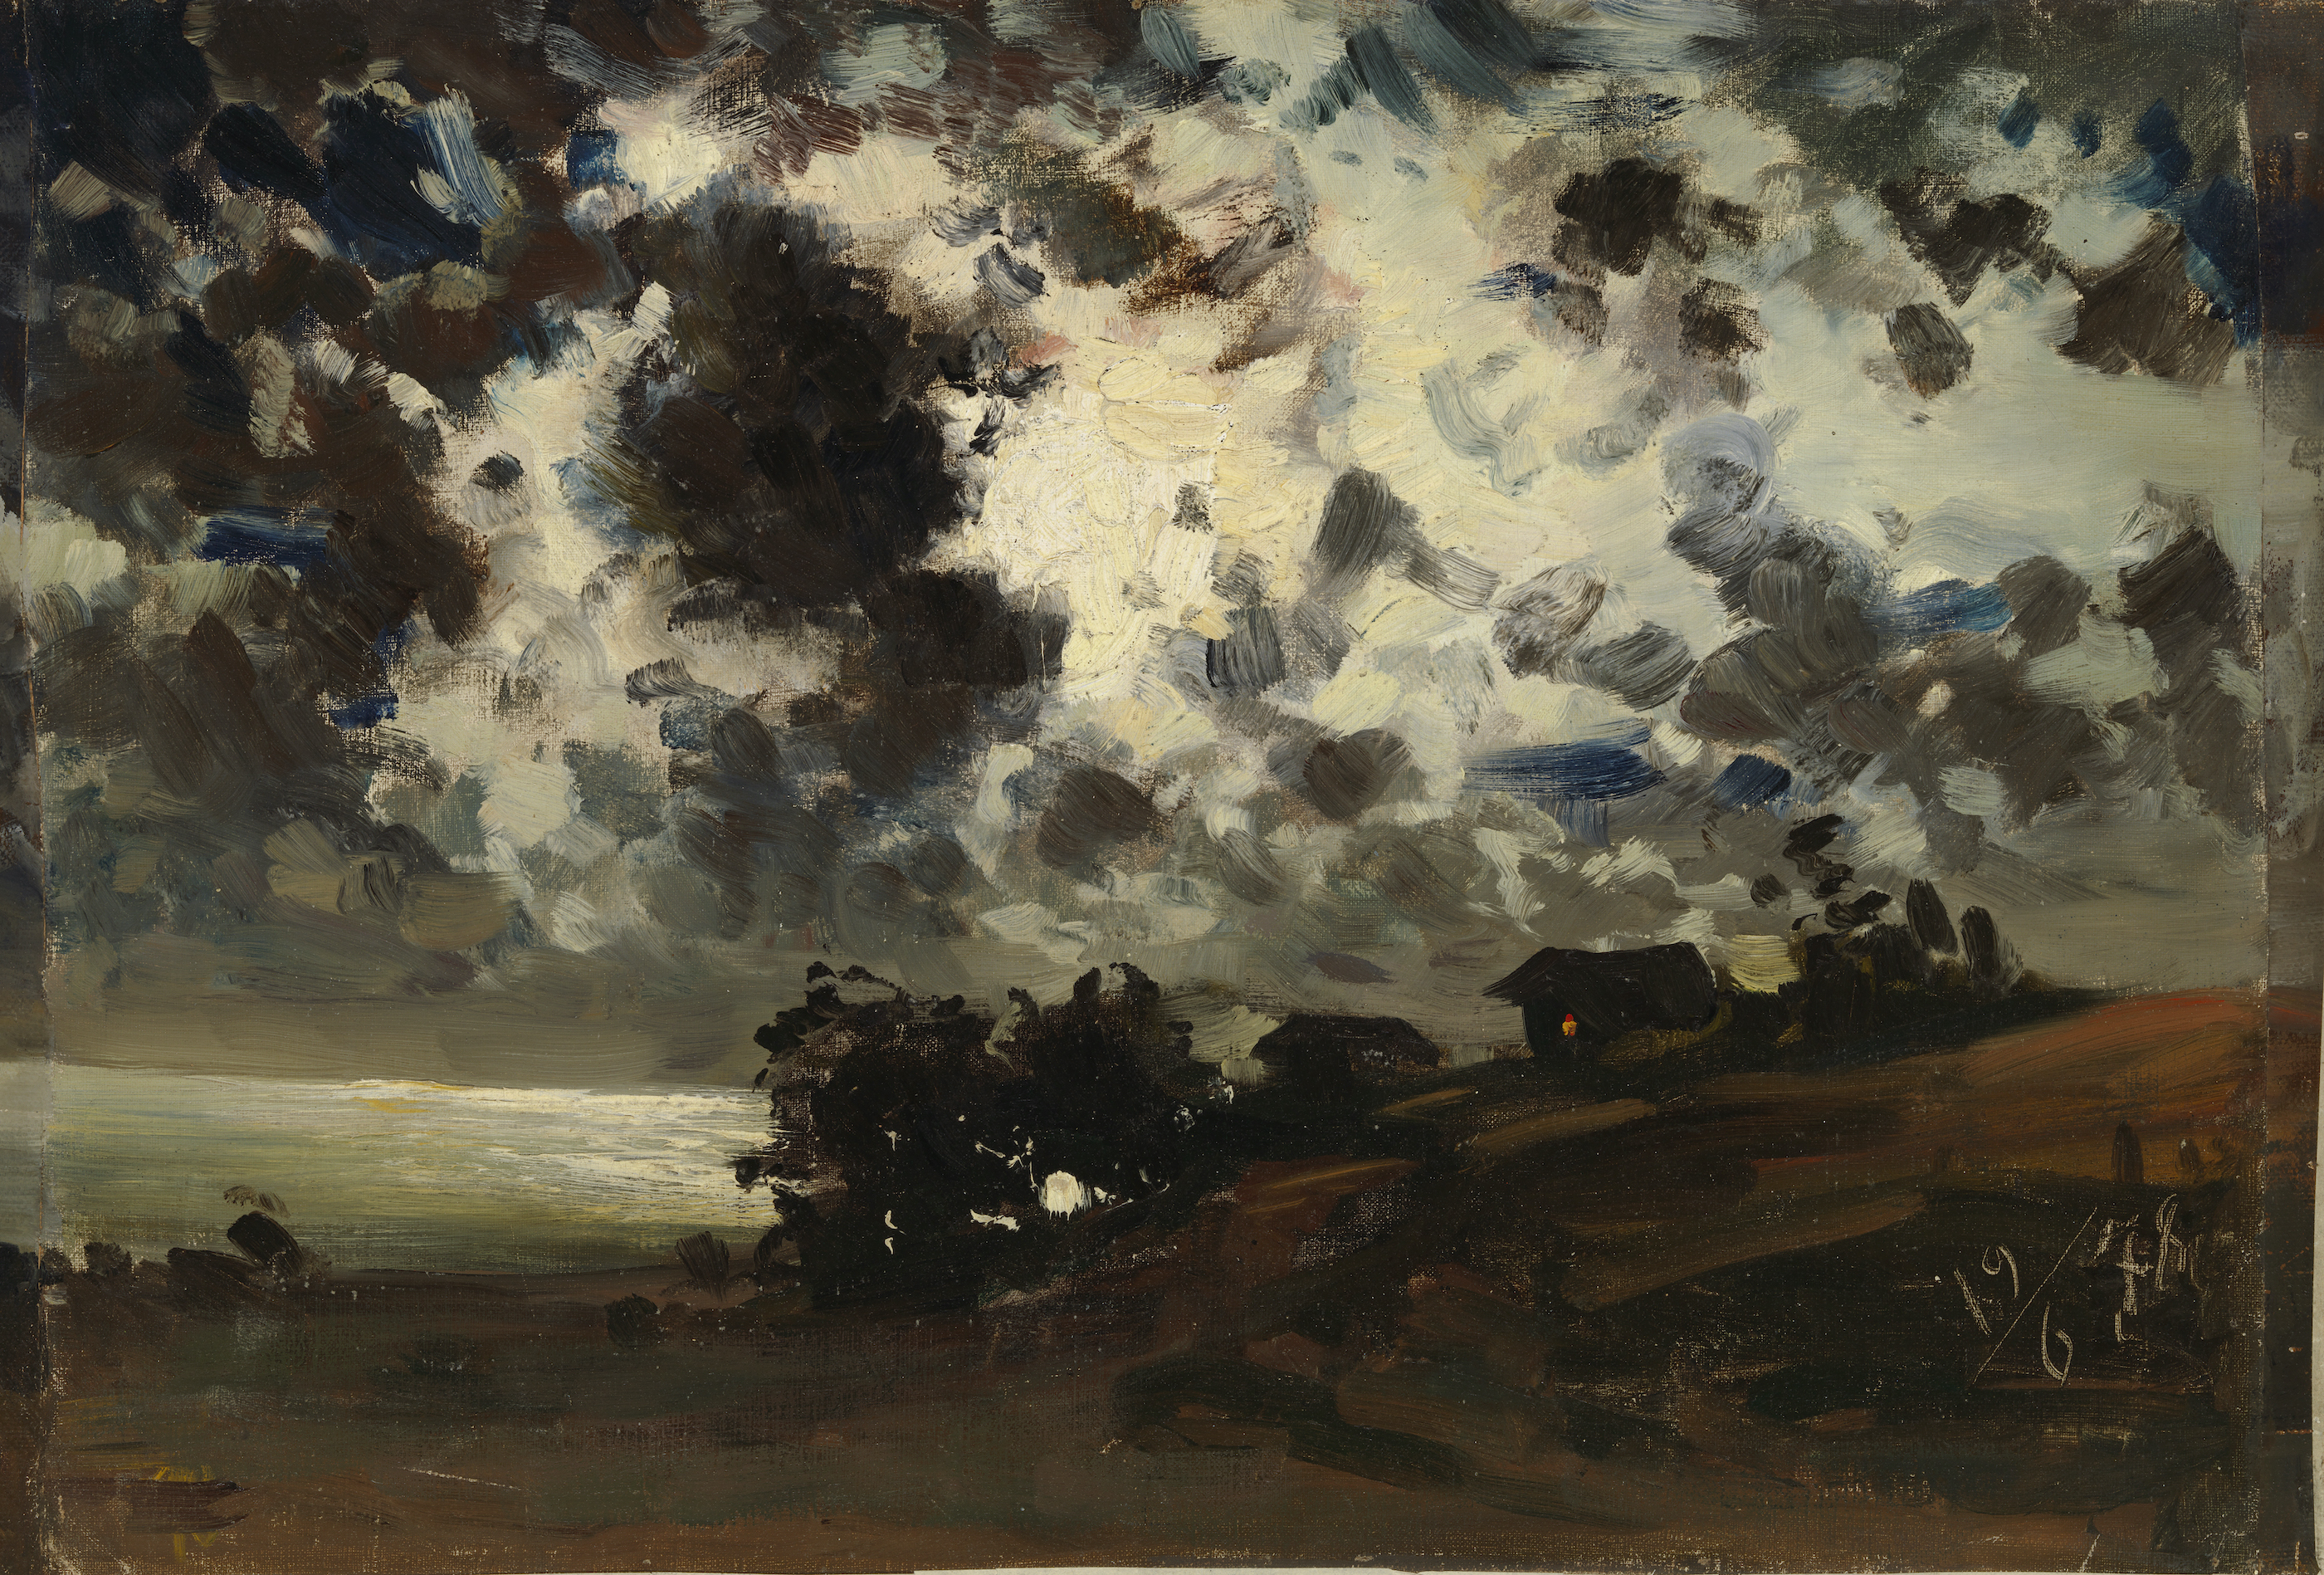 Moonlight, Study by Fanny Churberg - 1878 - 55.5 x 37.5 cm Finnish National Gallery